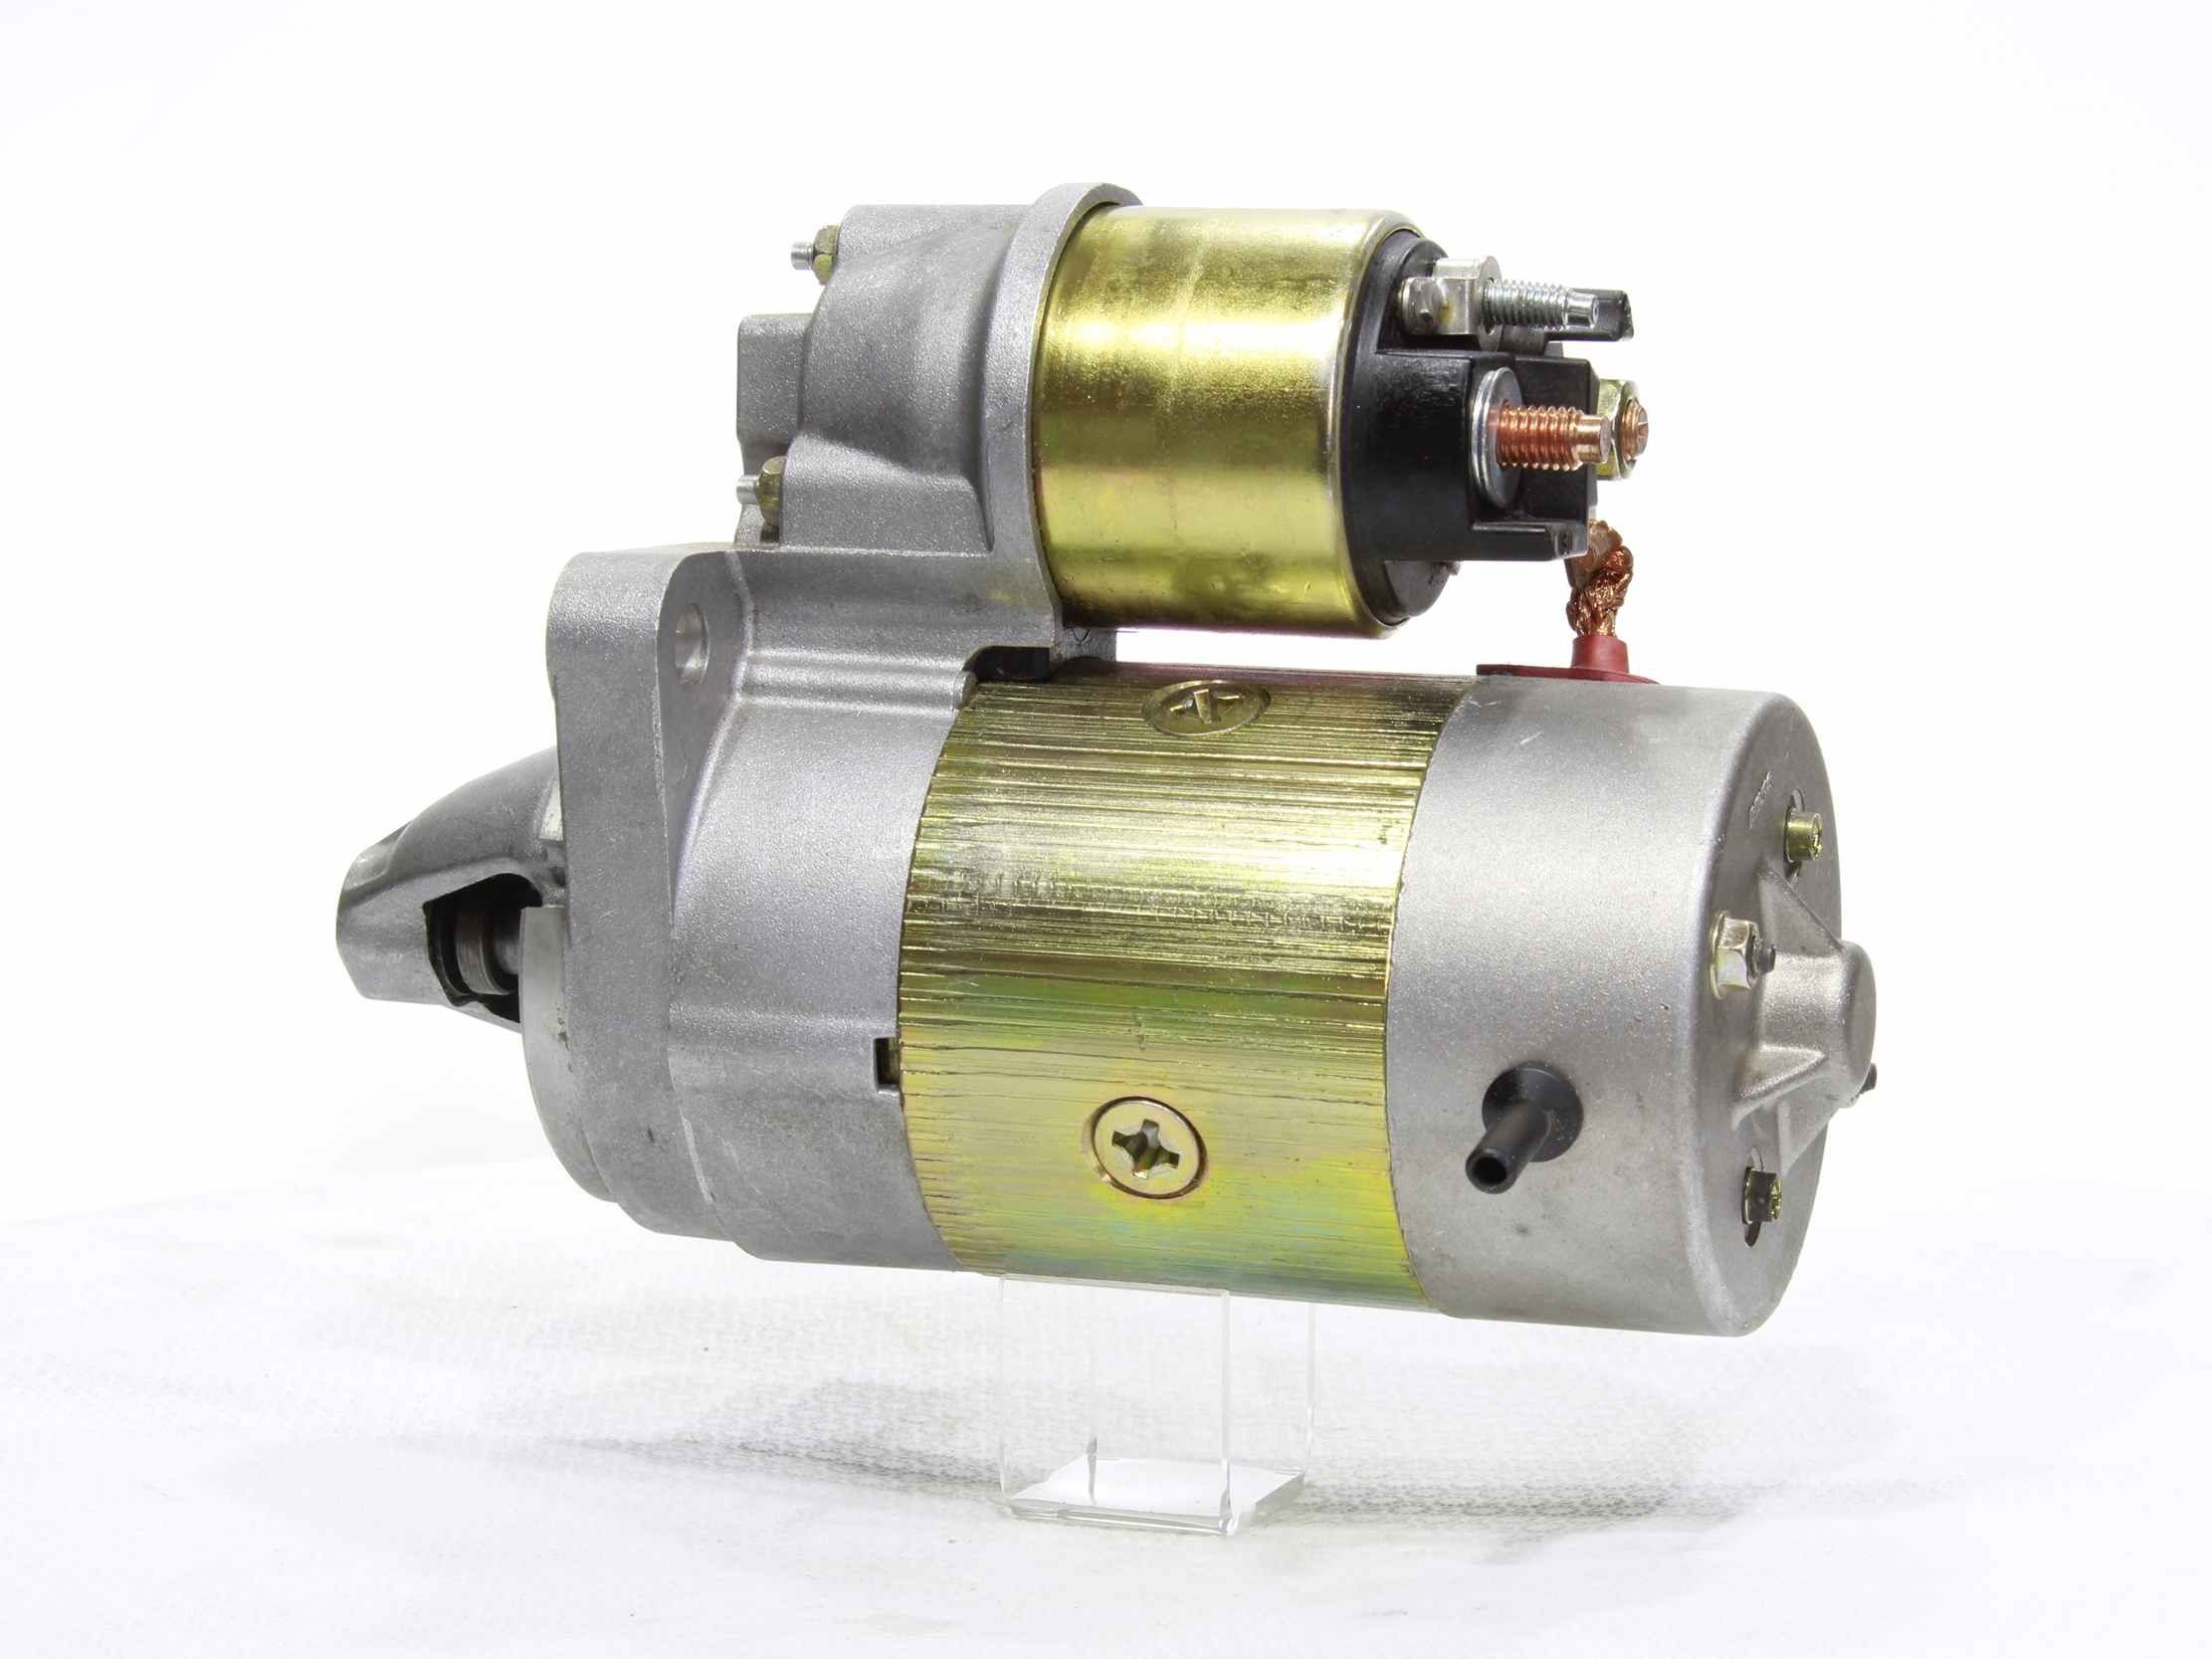 10440735 Engine starter motor ALANKO STR52028 review and test